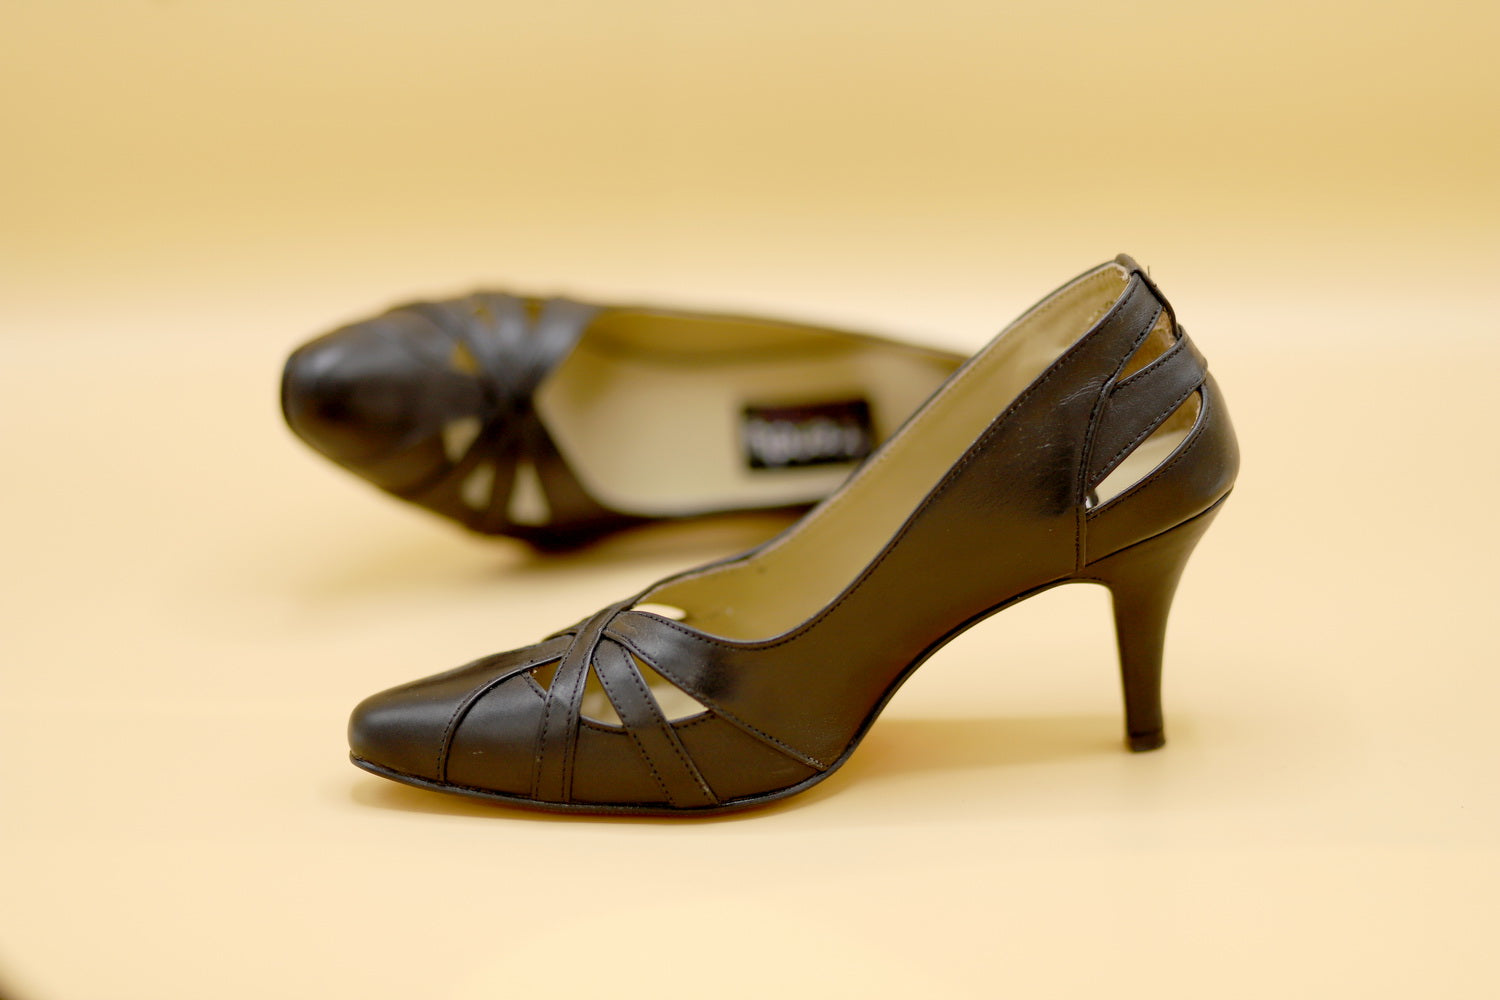 Stylo-Bridal-Shoes | Shoes women heels, High heel sandals, High heel shoes